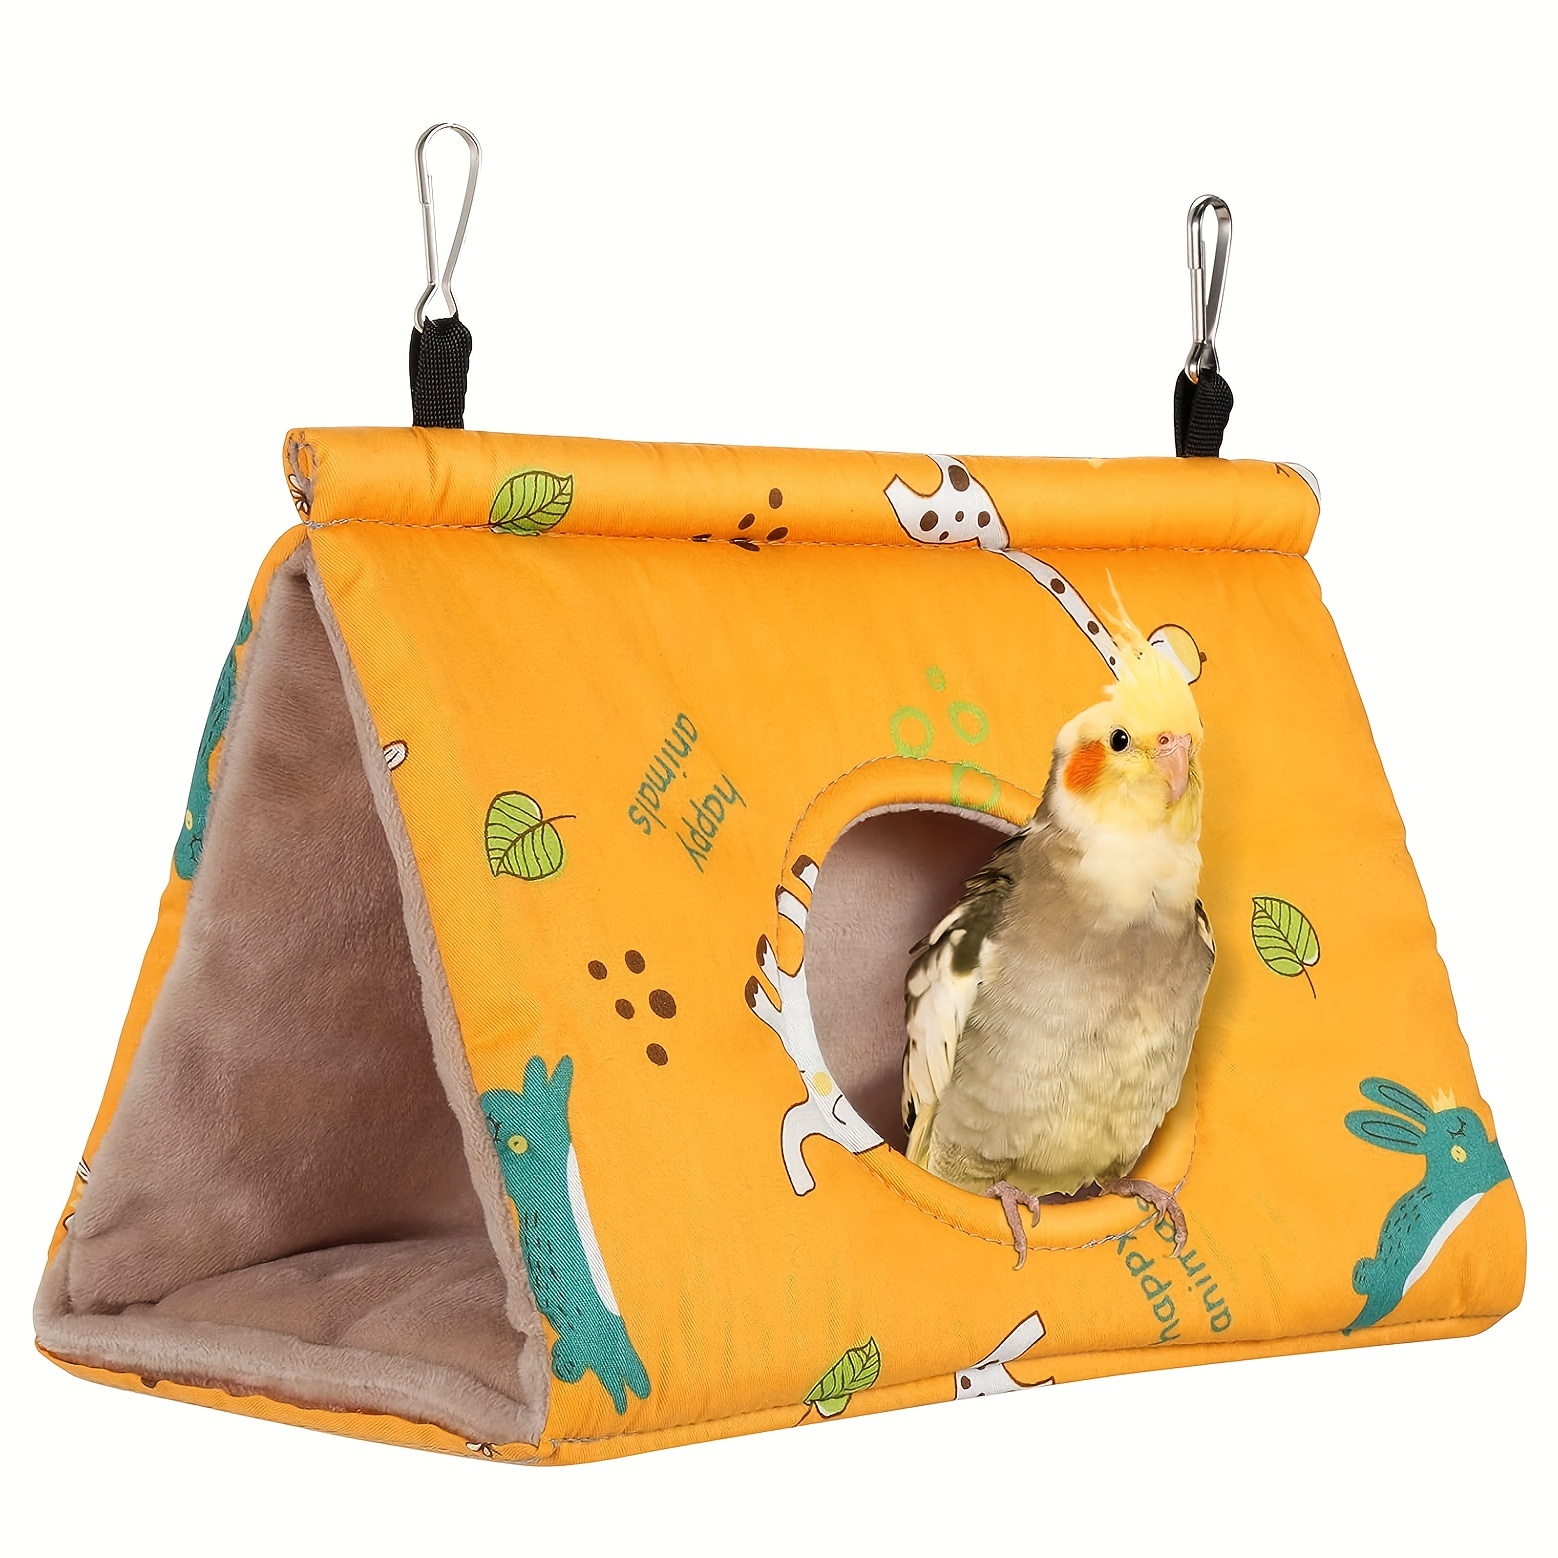 Parrot Triangular Bird Nest House Bed Habitat Cave Hanging Tent For Budgies  Parakeet Cockatiels Lovebird